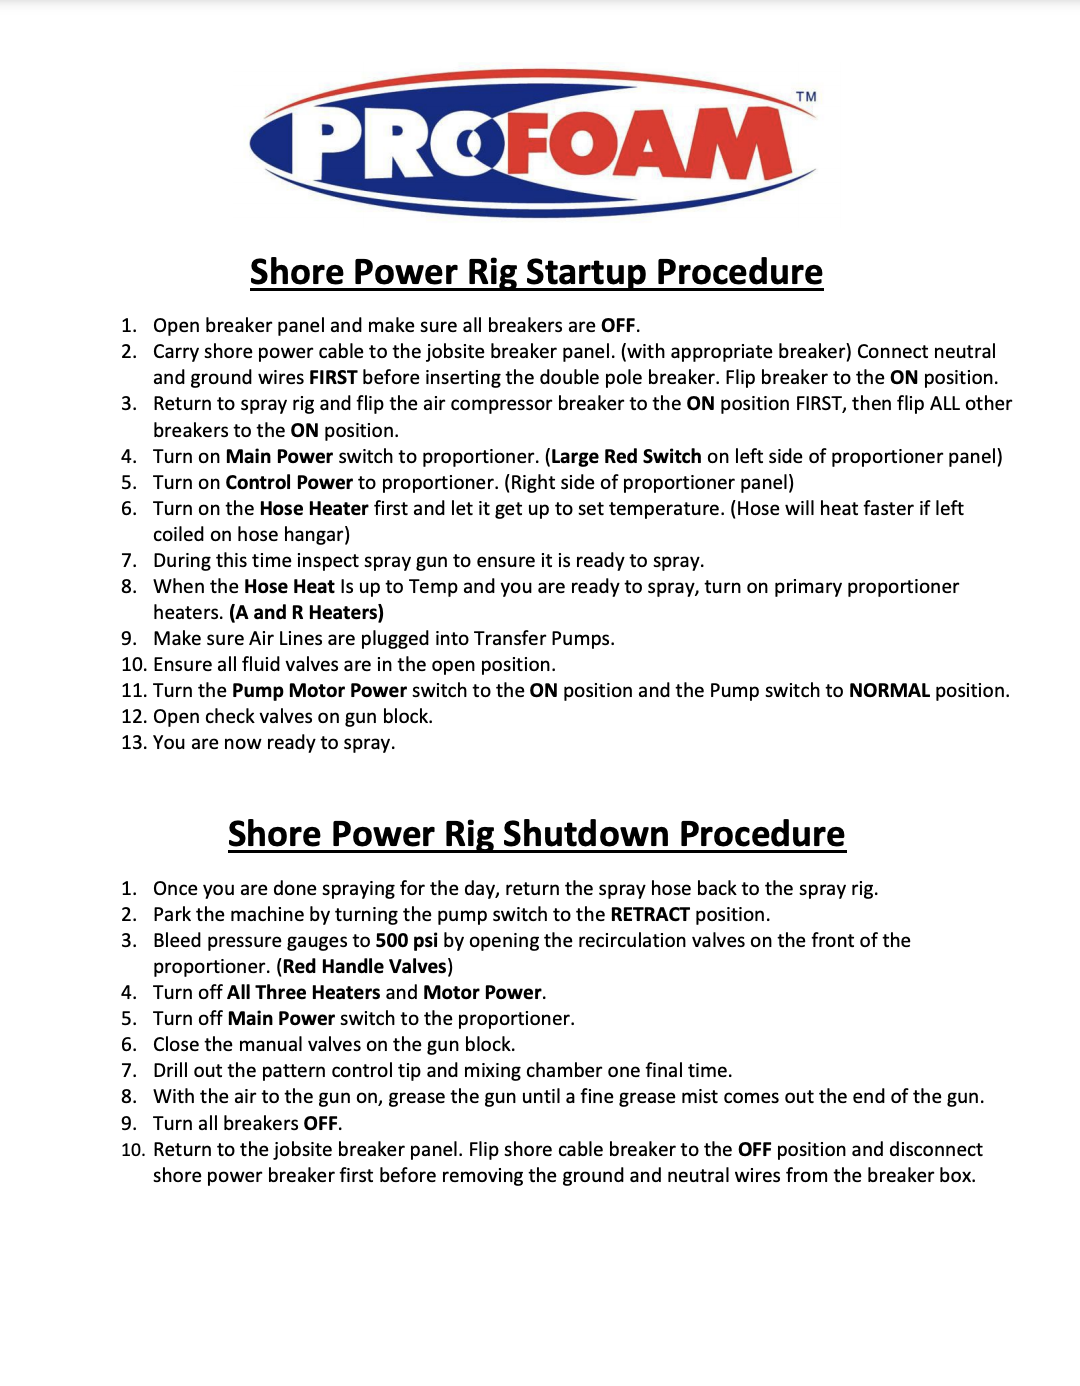 Shore Power Rig Startup and Shutdown Procedures